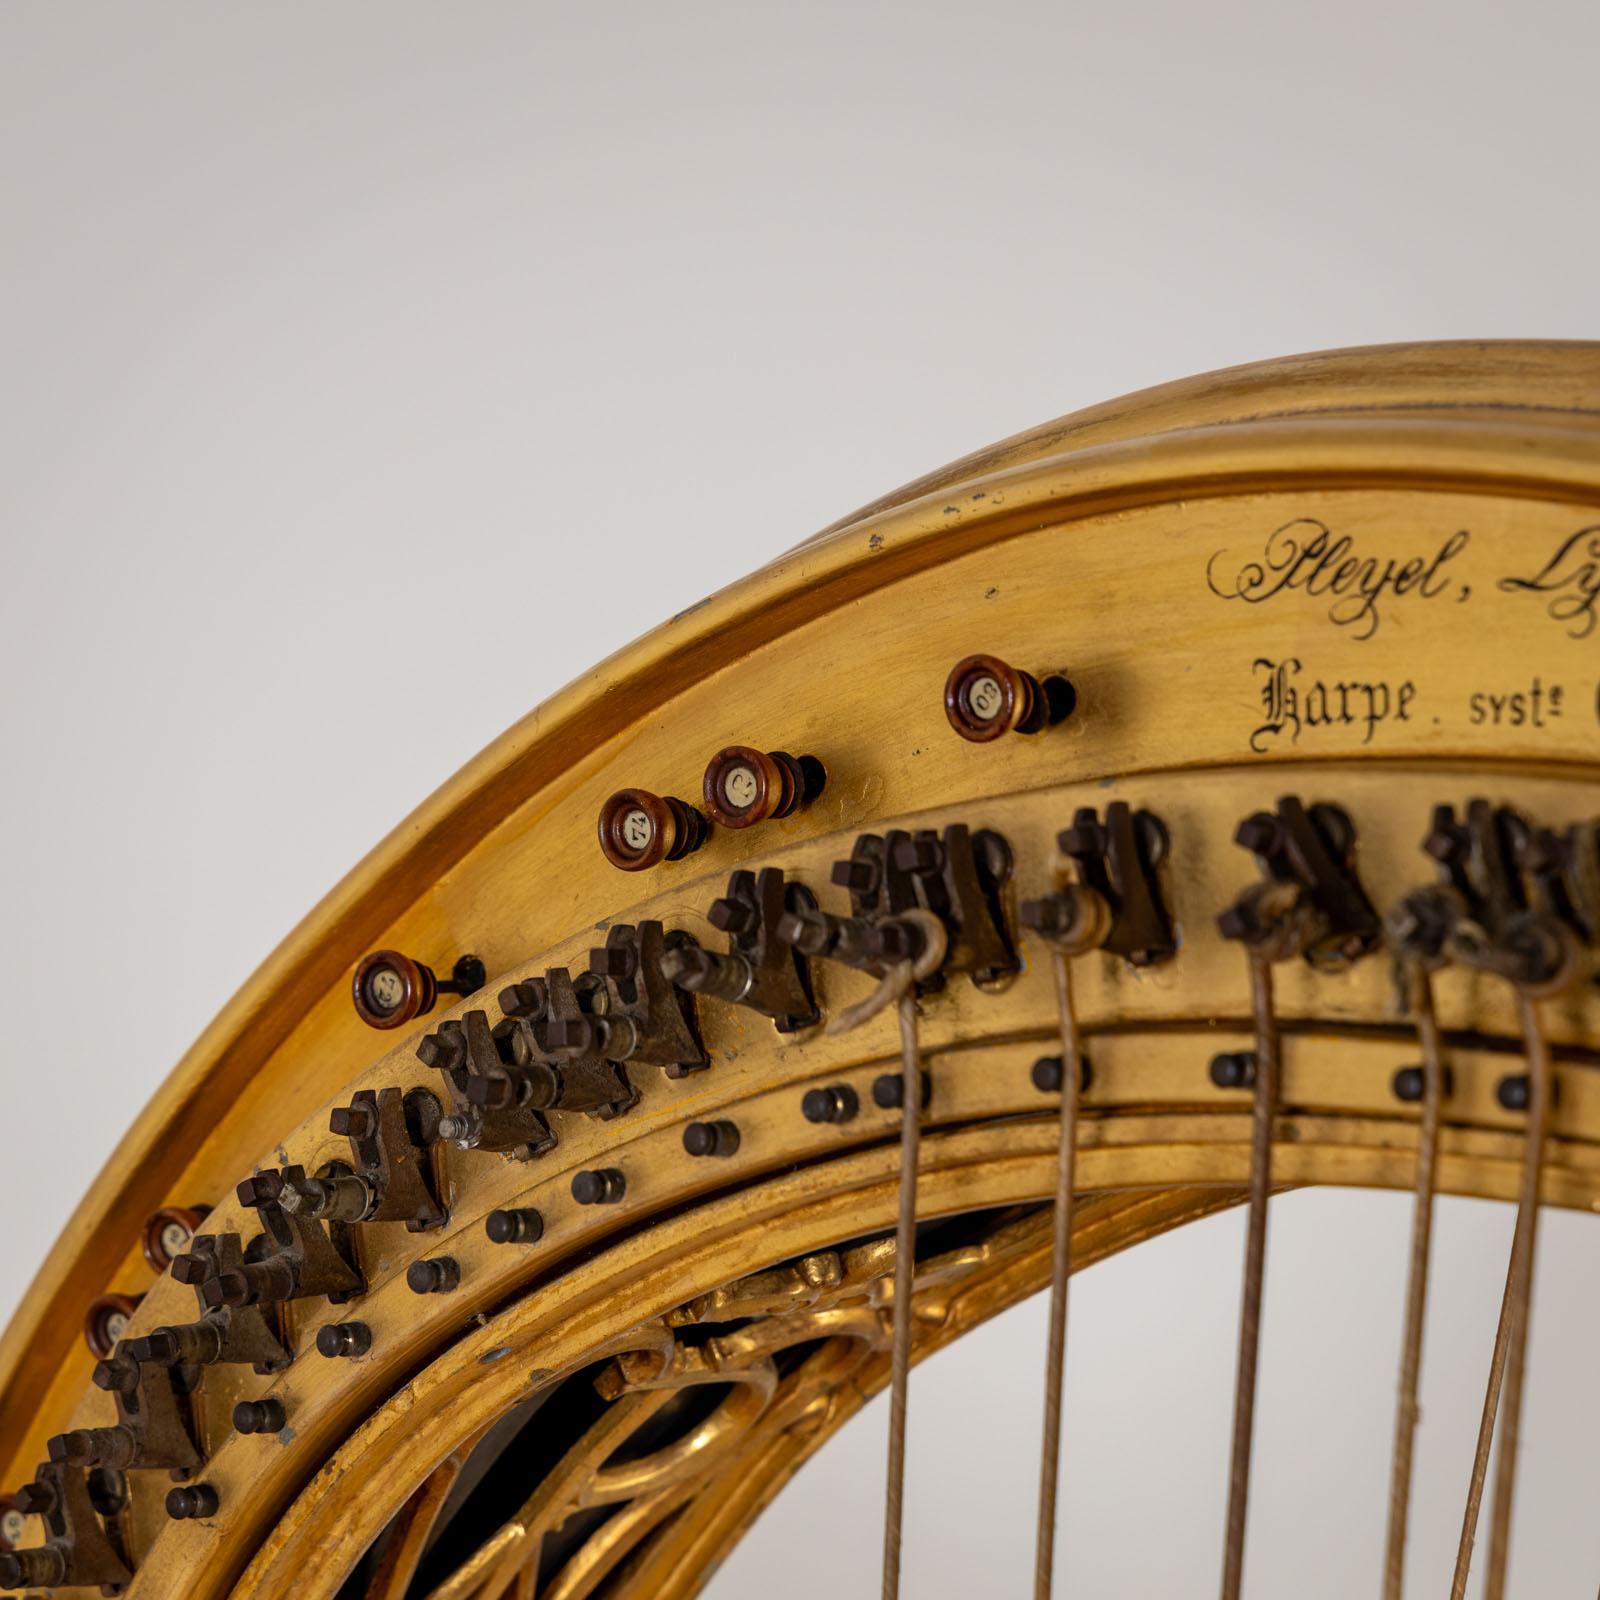 Chromatic Double Harp, Pleyel, Lyon & Cie, Paris, circa 1900 For Sale 12